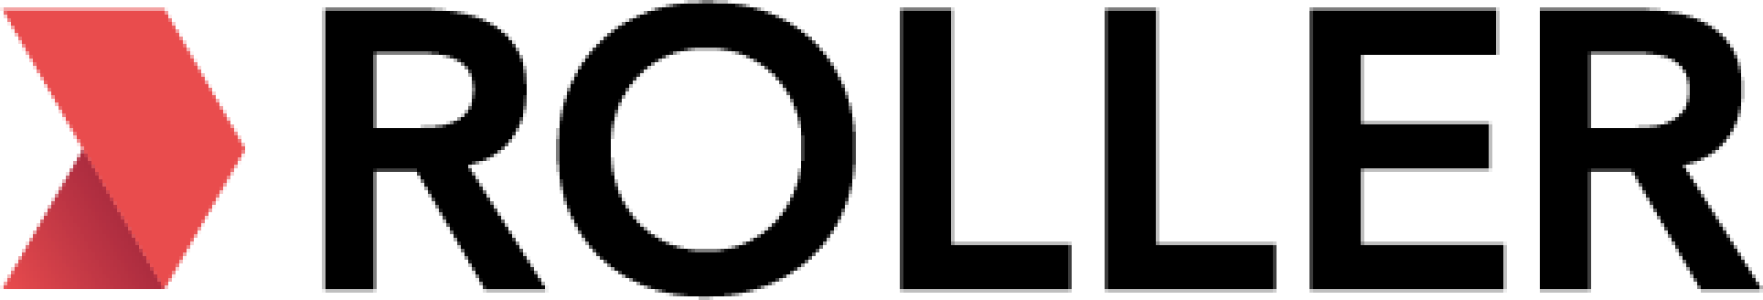 Logotipo do software de rolo